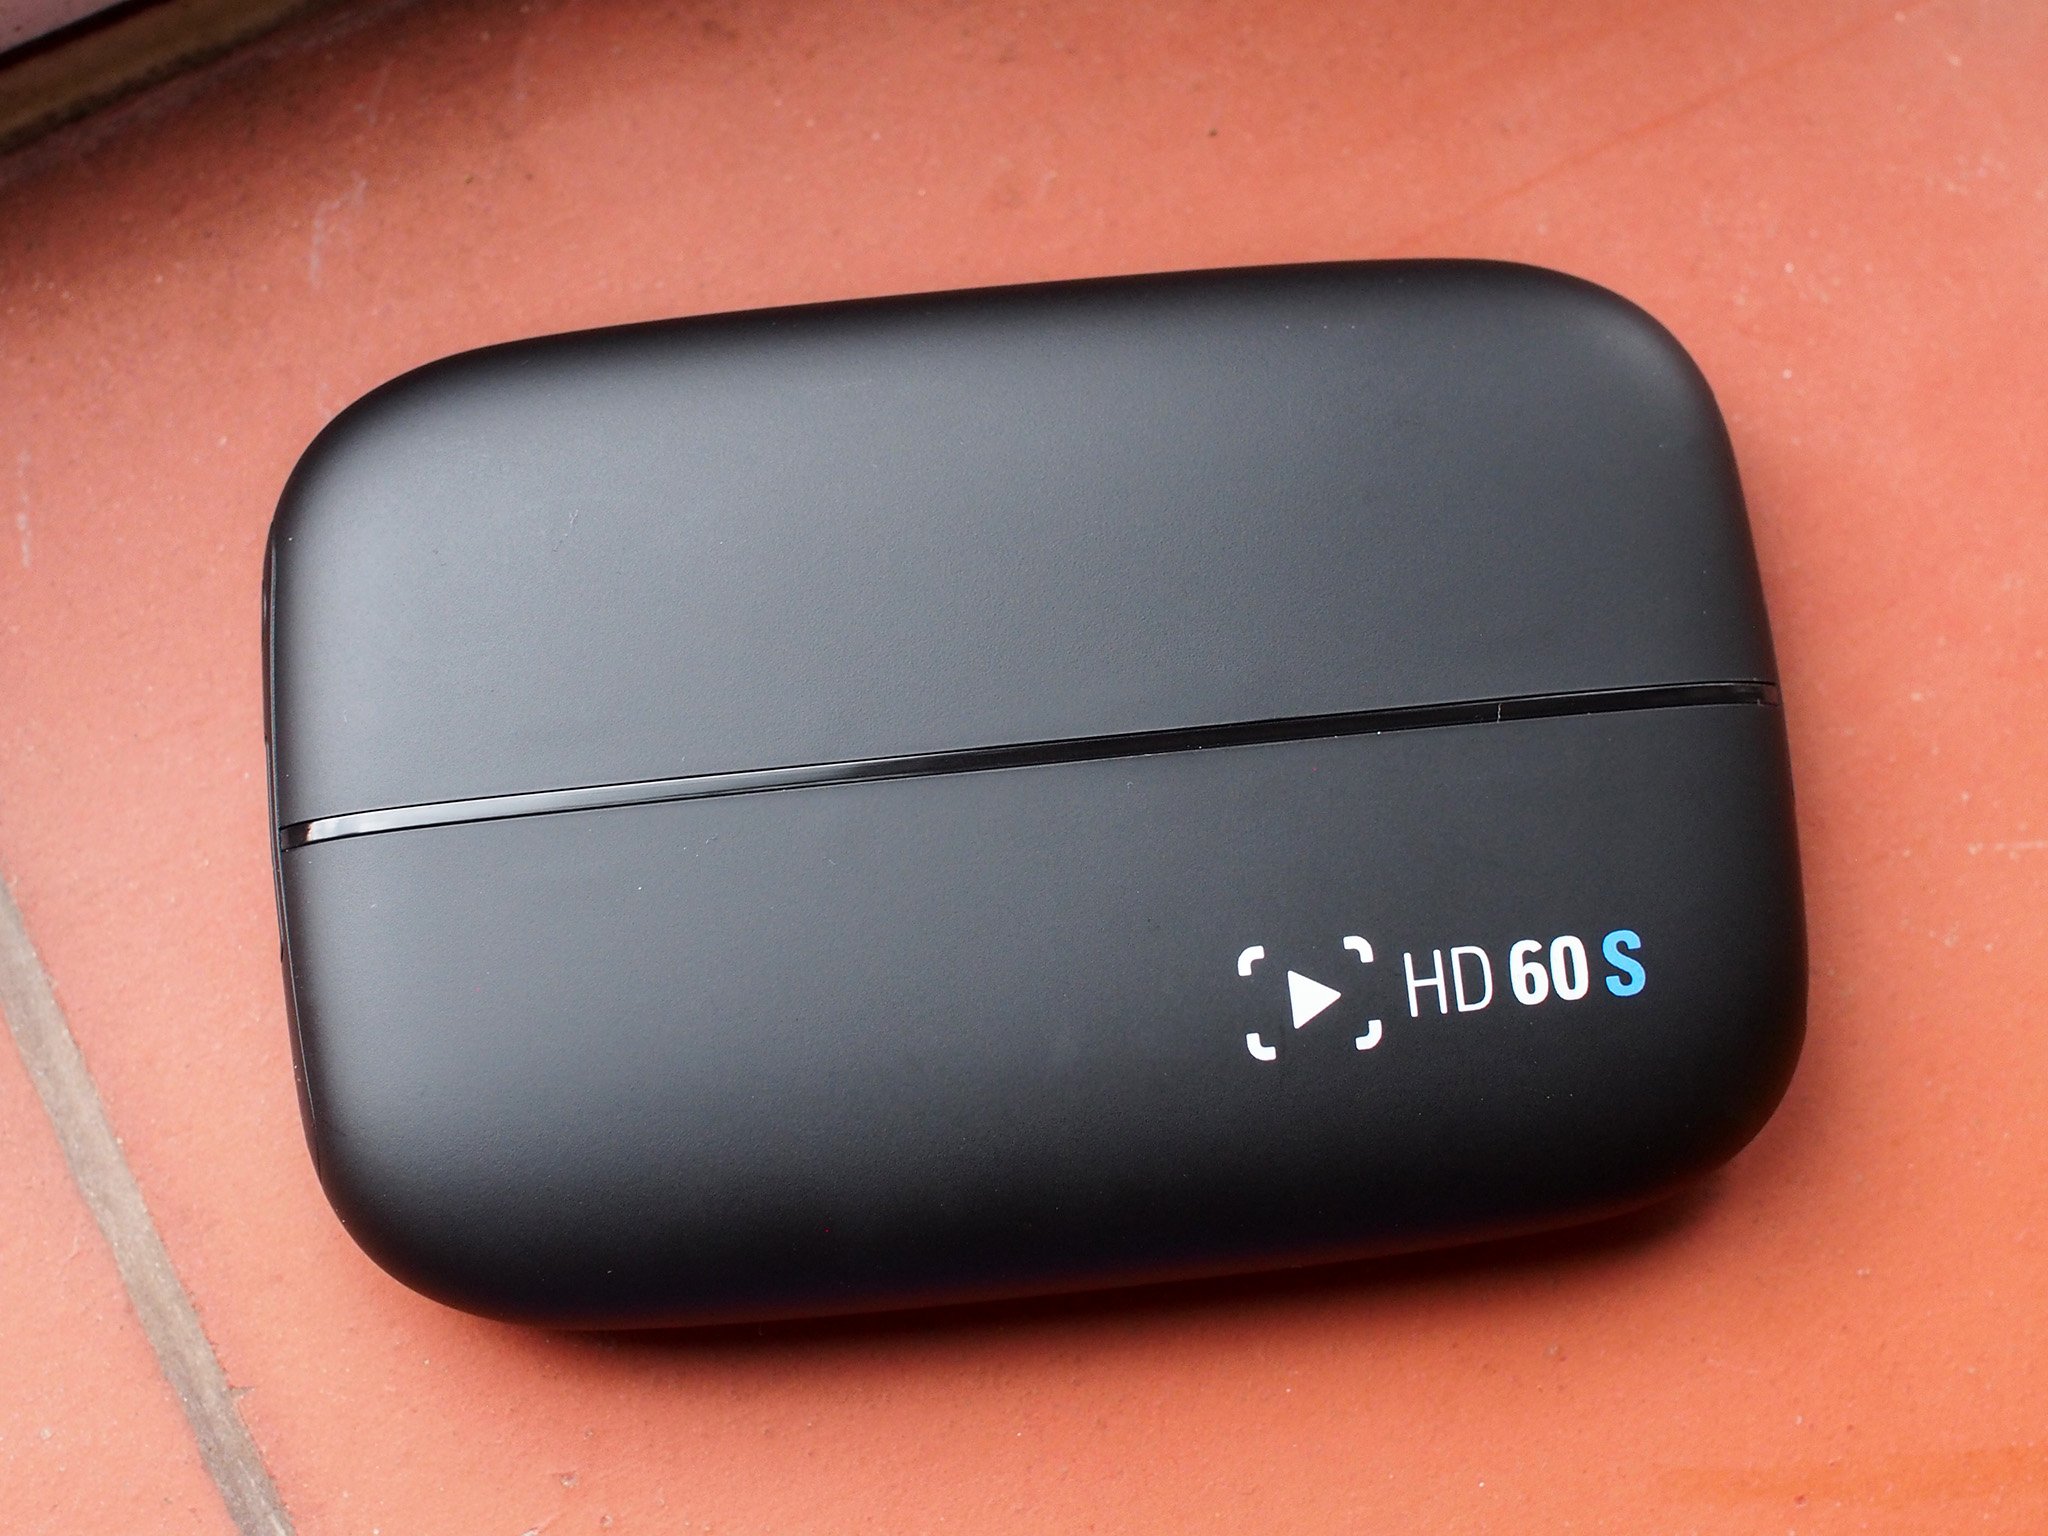 Elgato HD60 S